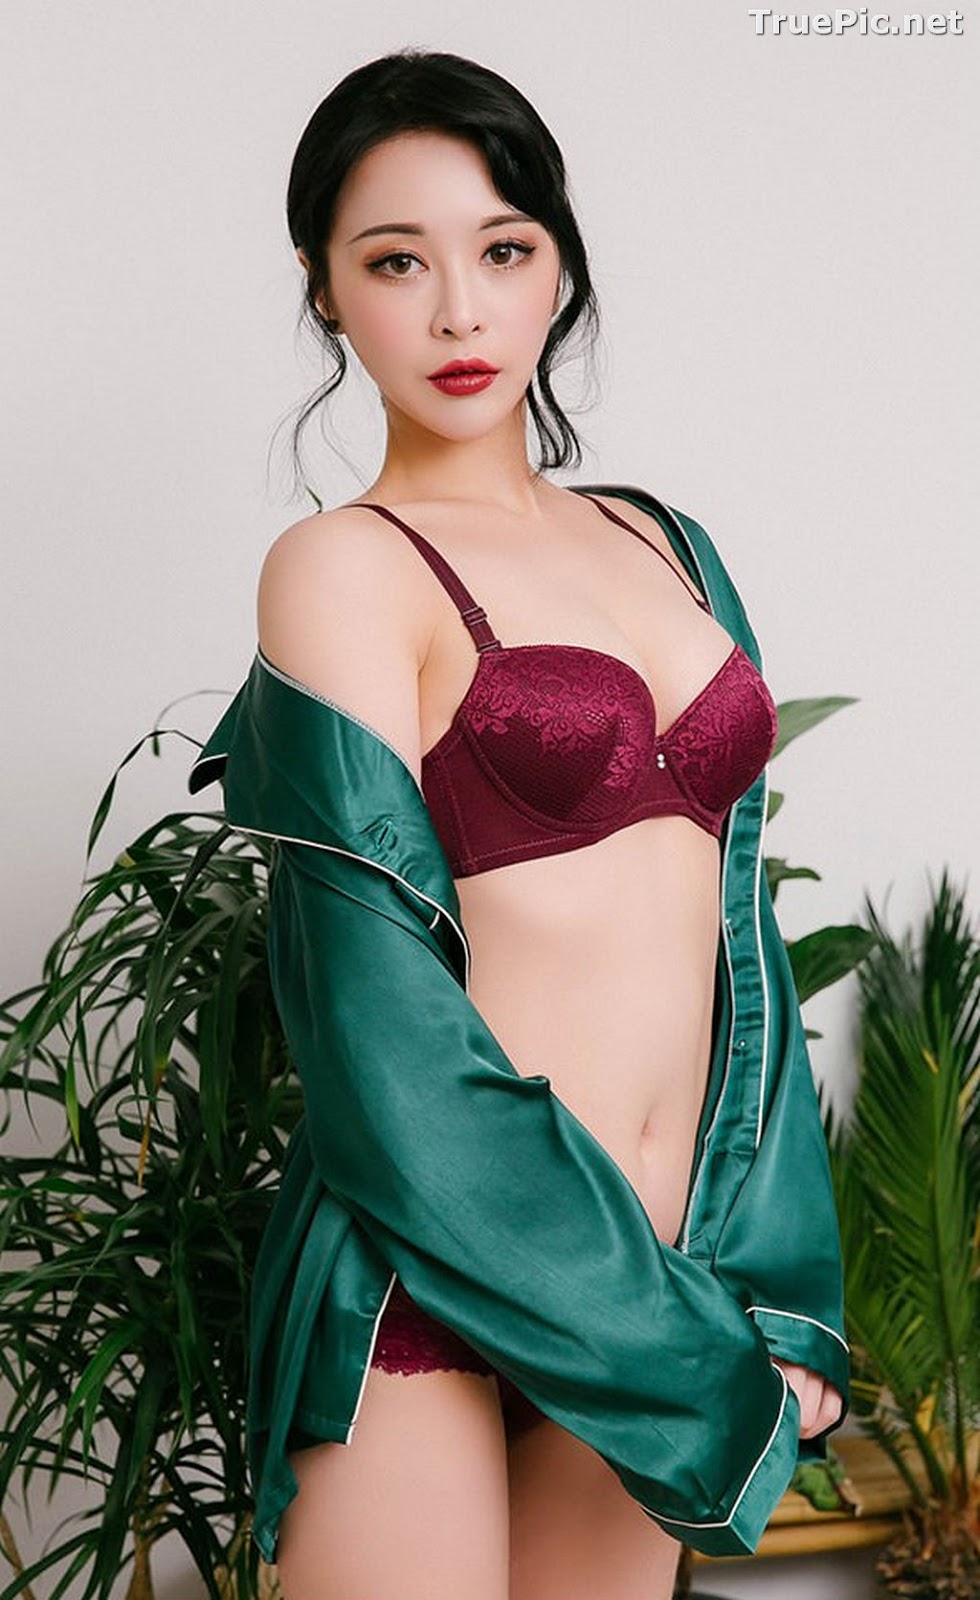 Image Ryu Hyeonju - Korean Fashion Model - Pijama and Lingerie Set - TruePic.net - Picture-23